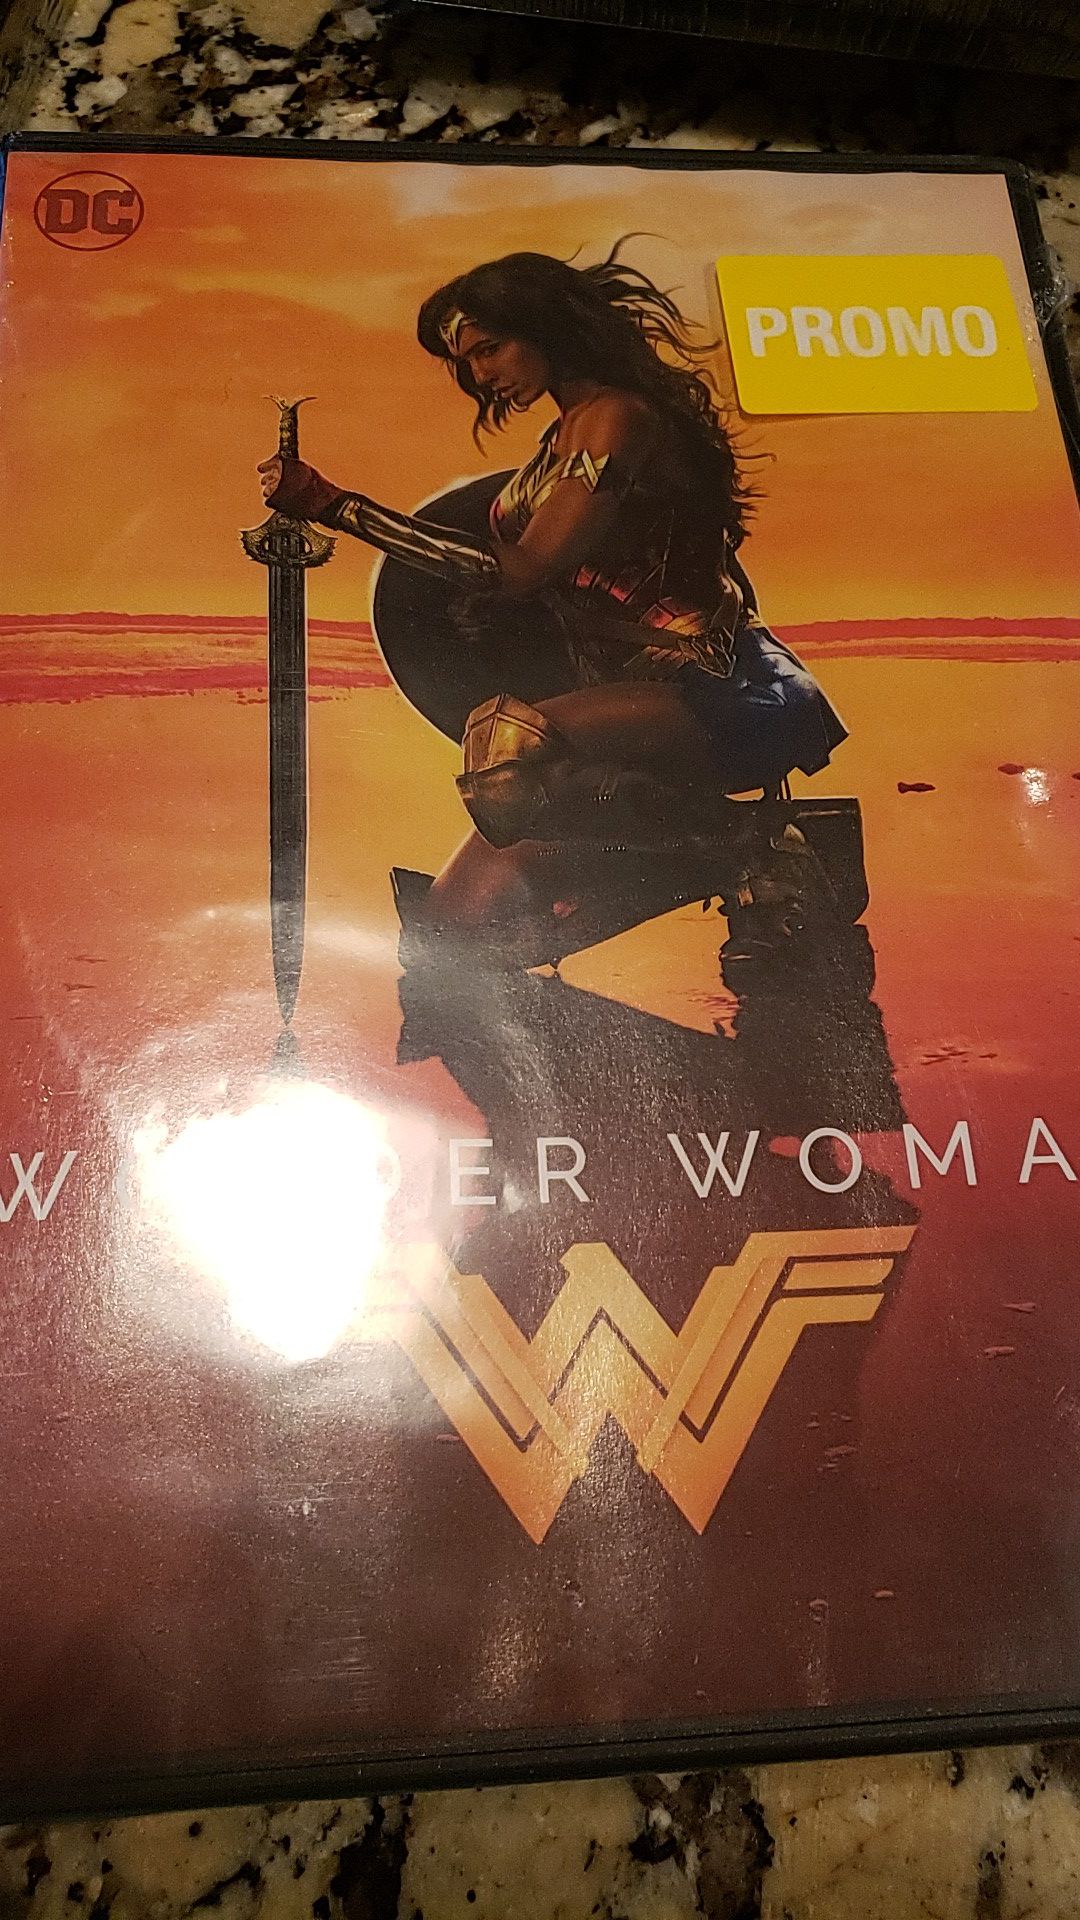 Wonder Woman Movie